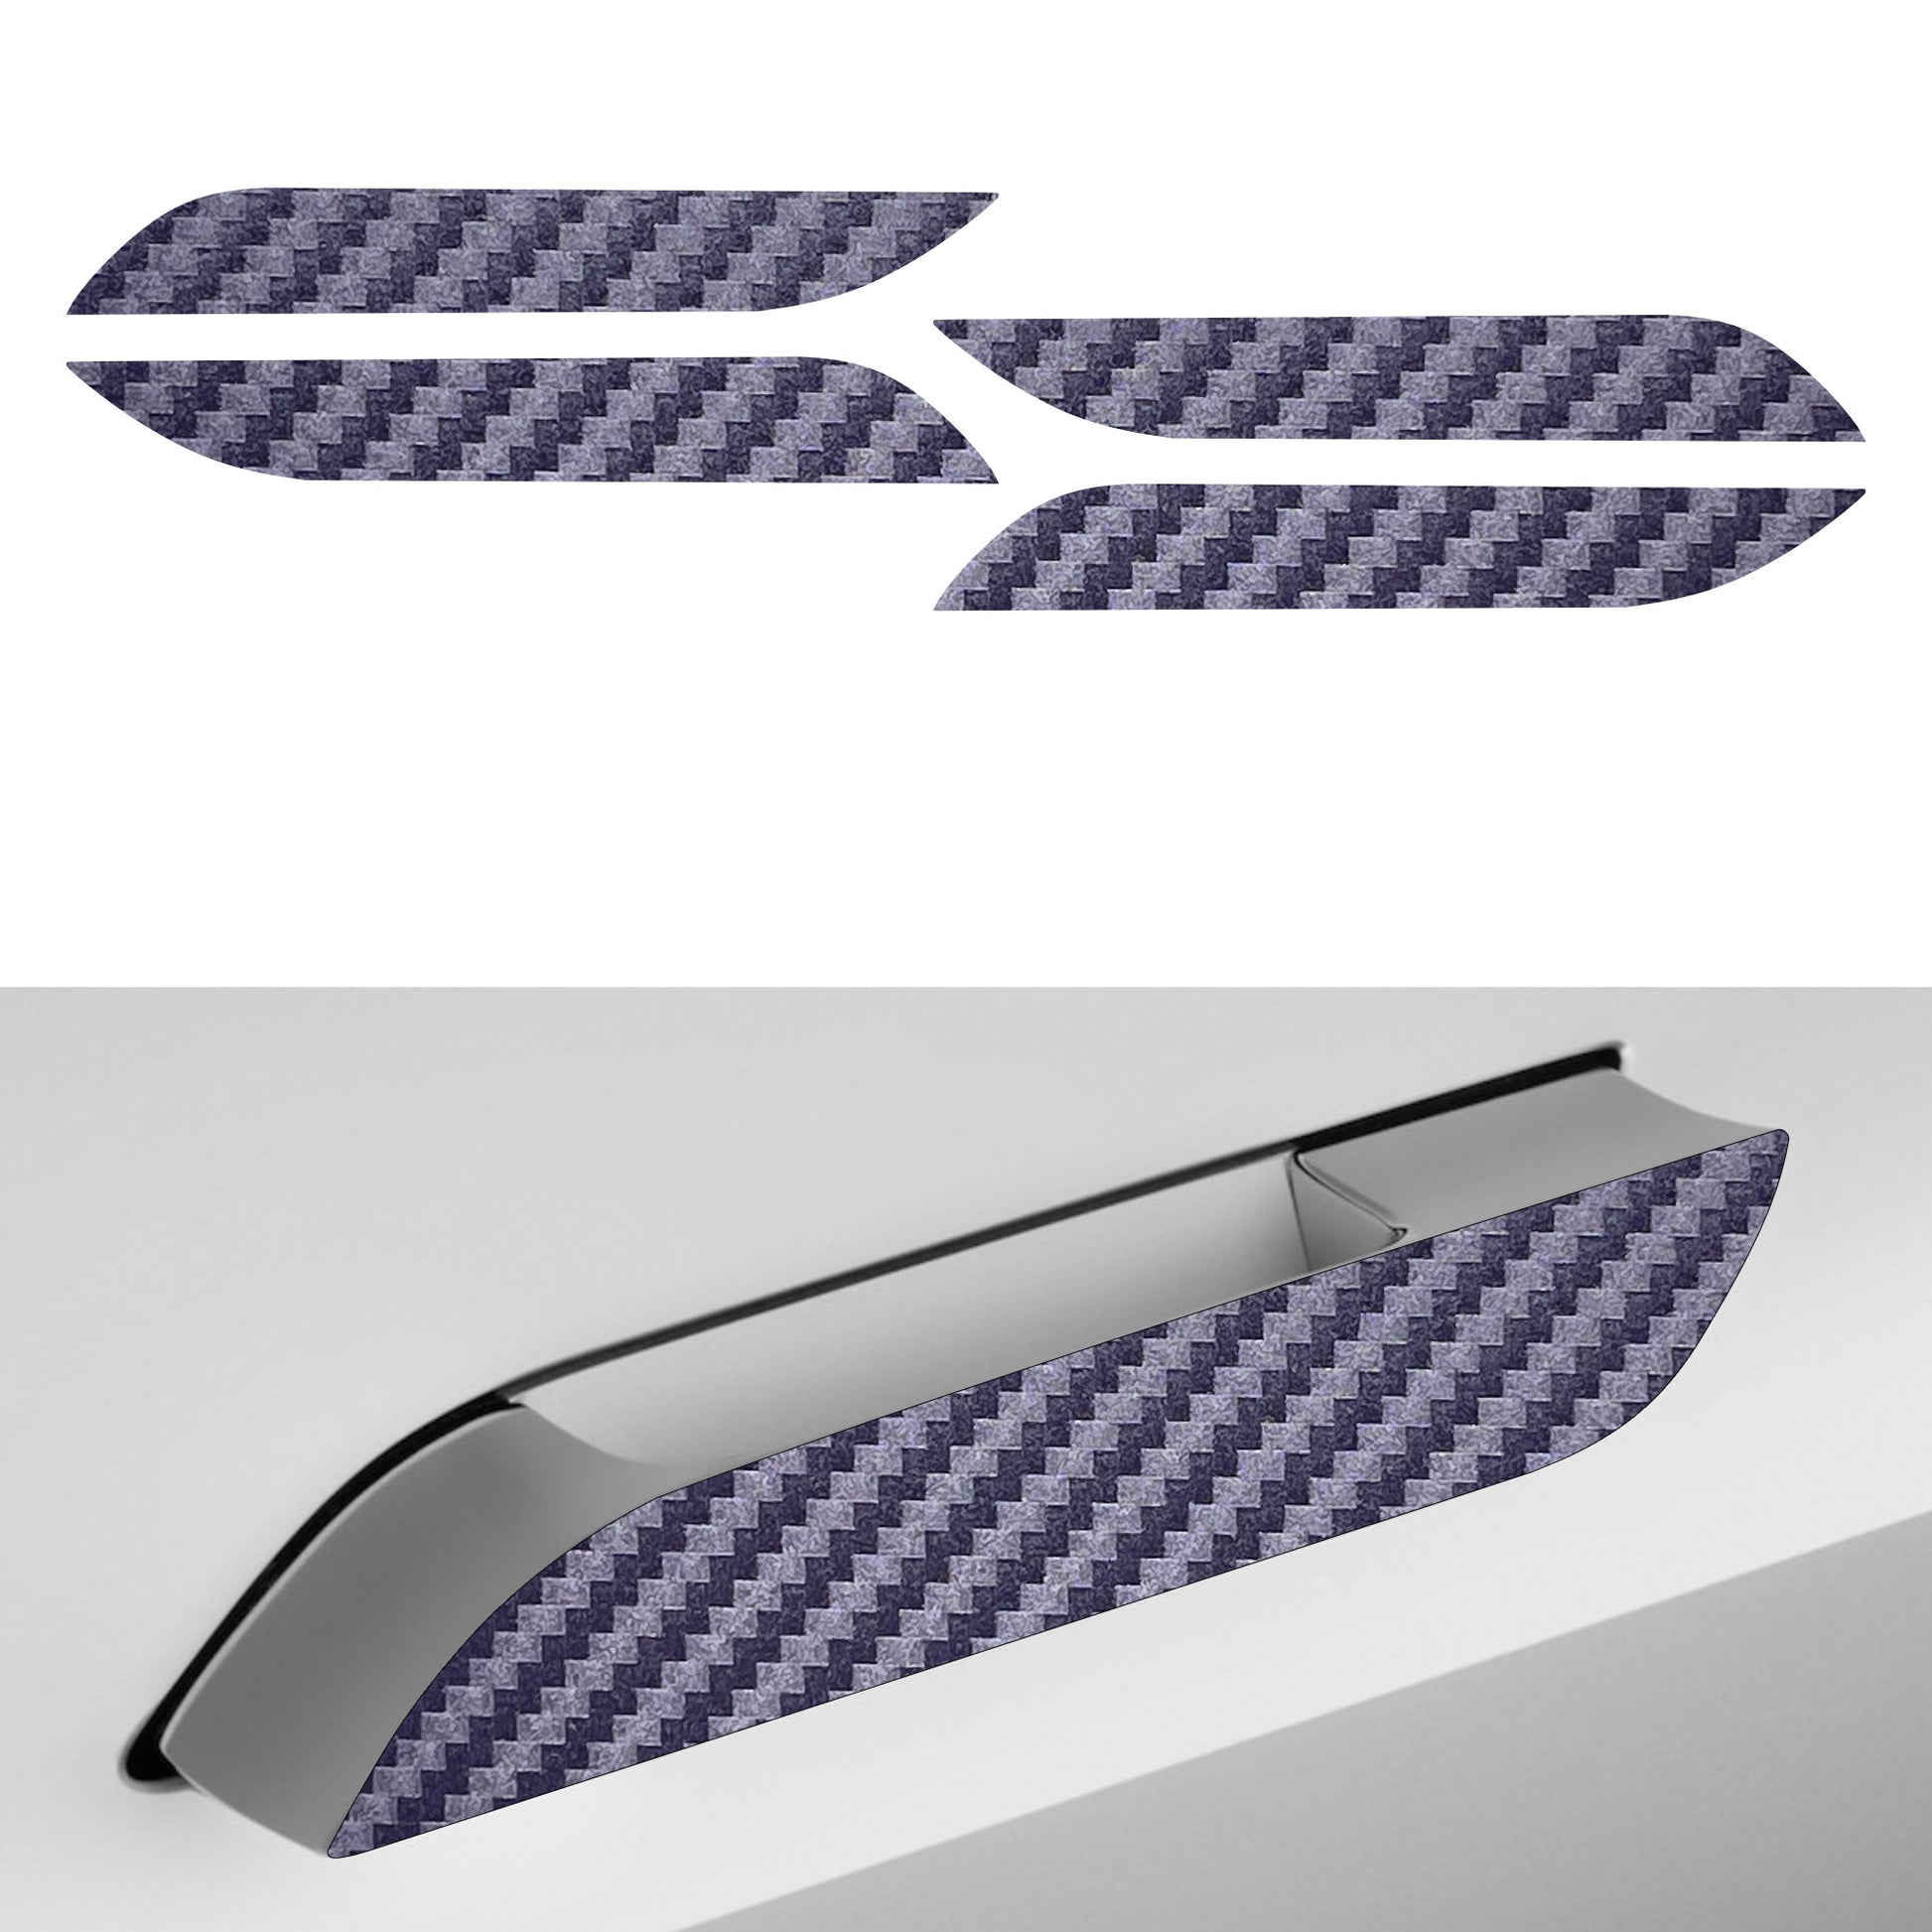 Carbon Fiber Car Door Threshold Decoration Strip Stickers for Tesla Model X